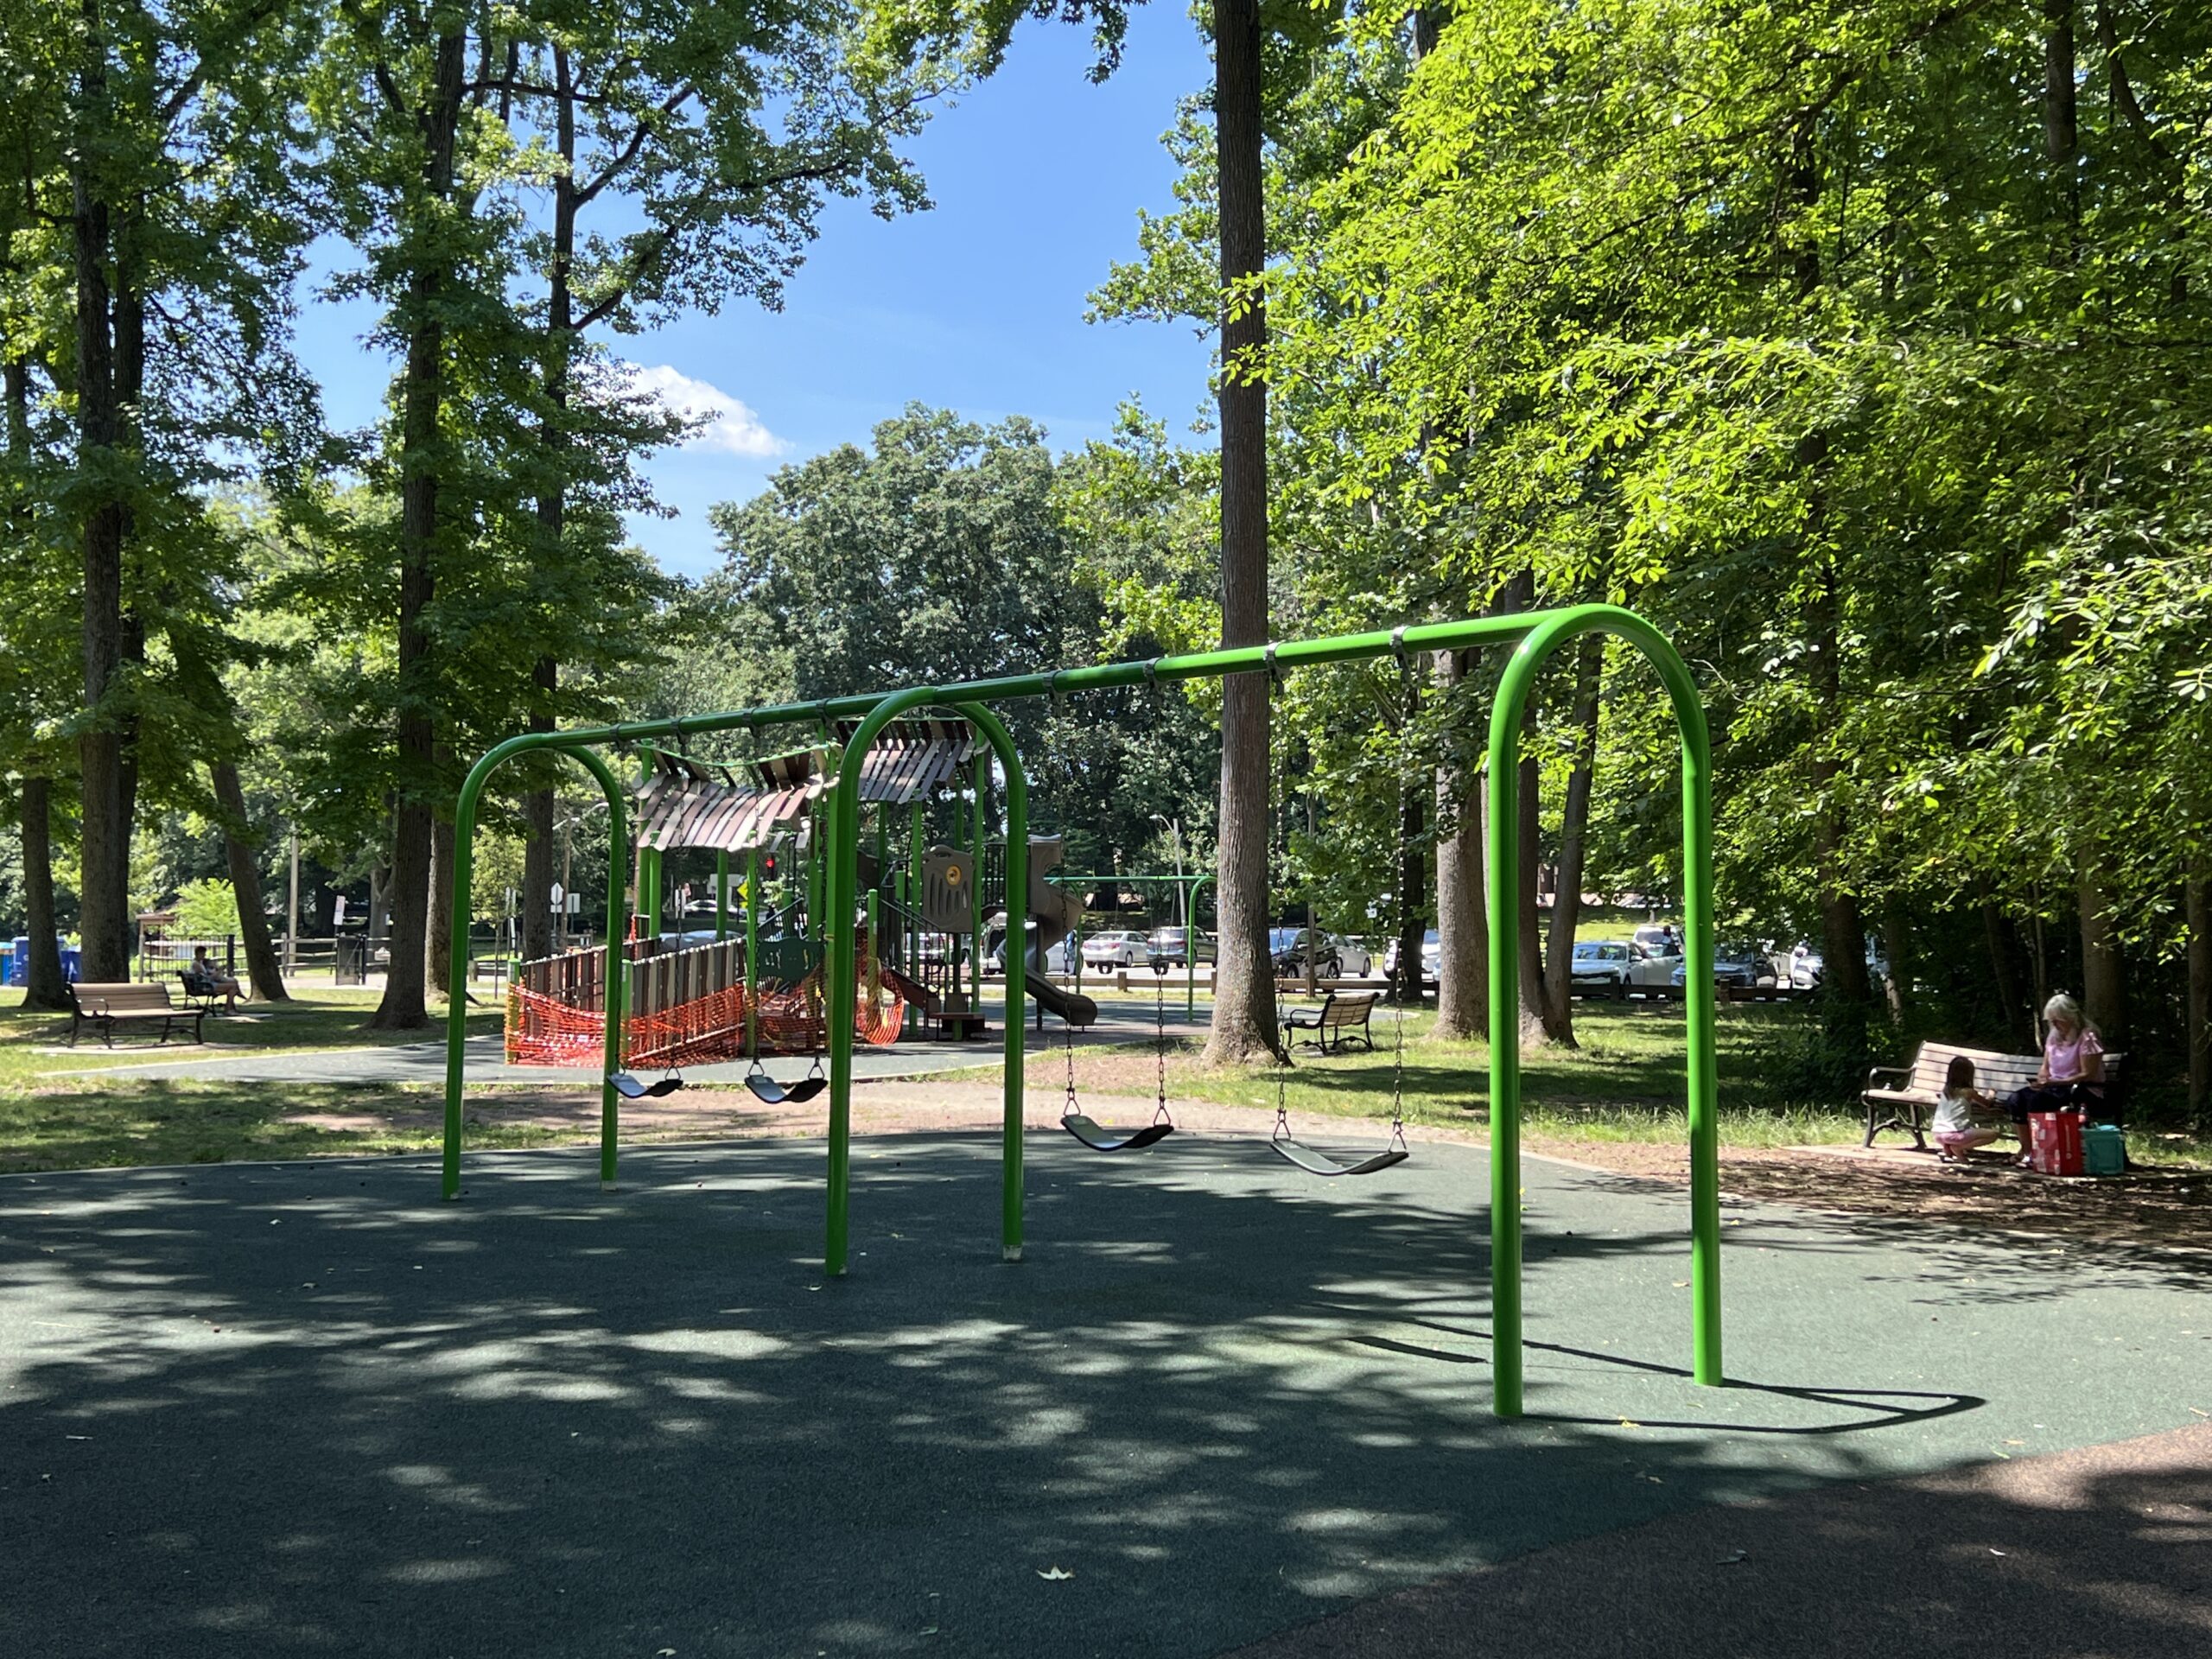 Nomahegan Park Playground in Cranford NJ - Swings - traditional swings WIDE